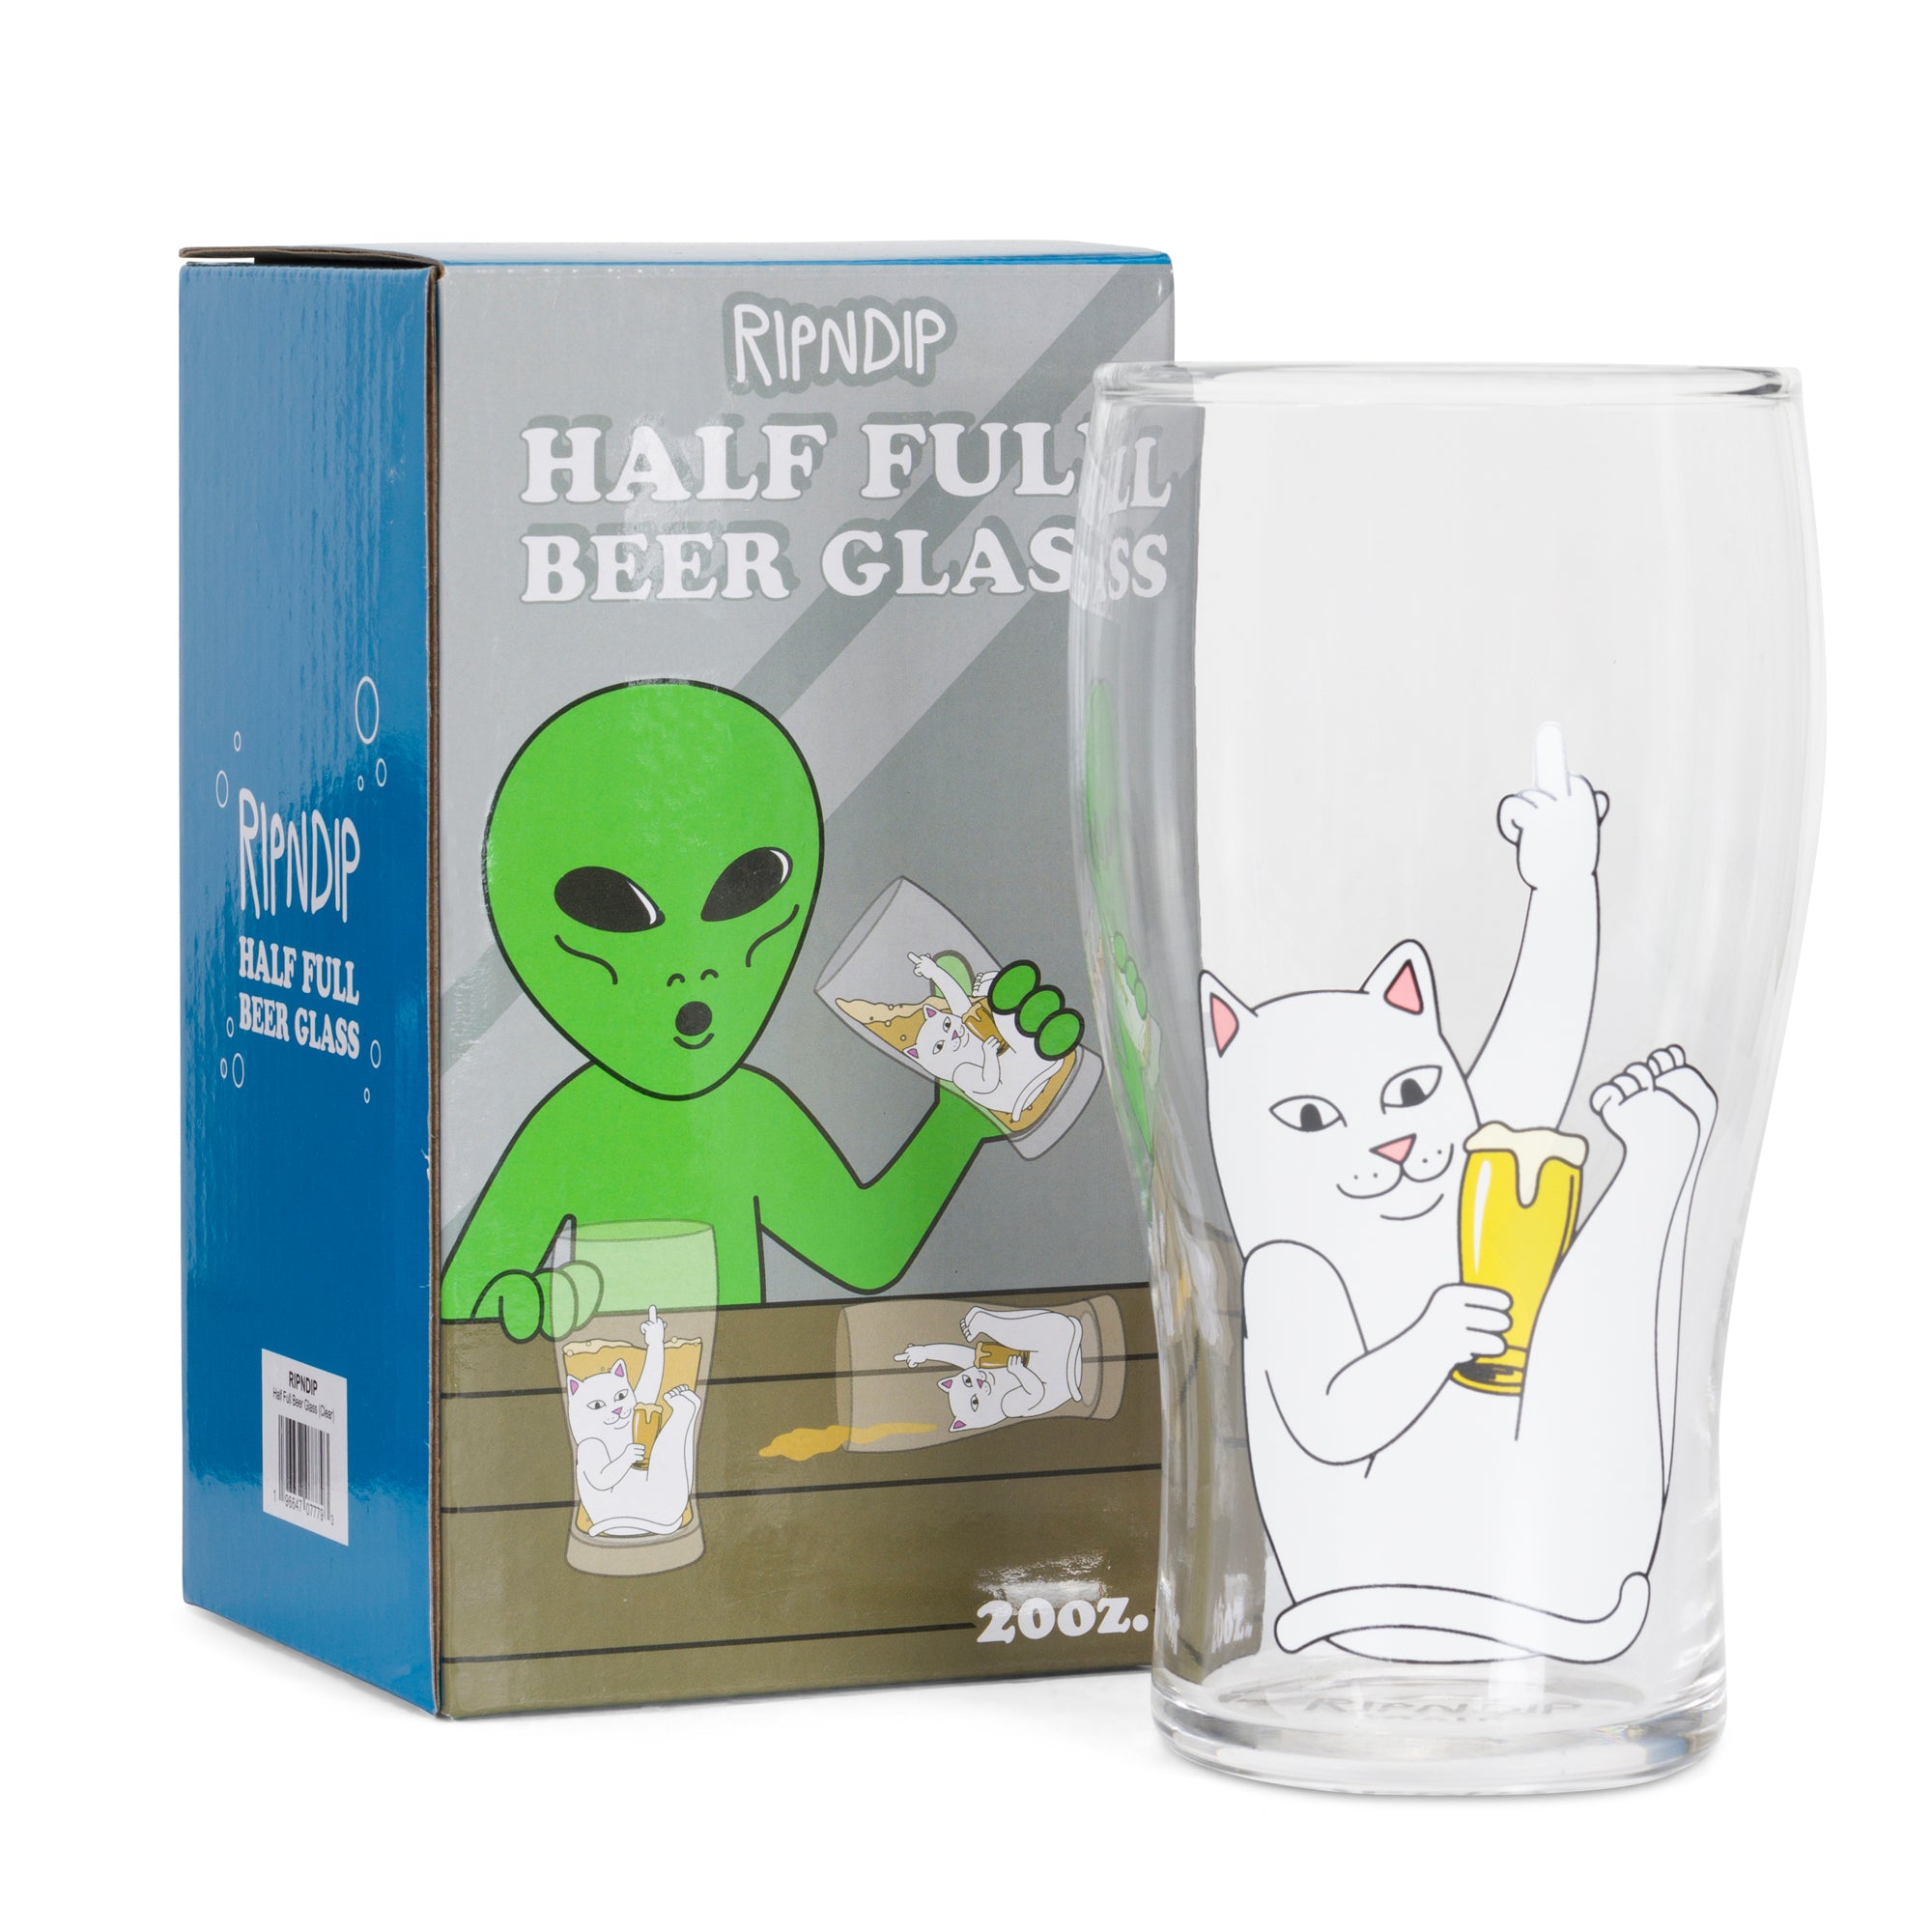 RIPNDIP Half Full Beer Glass (Clear)